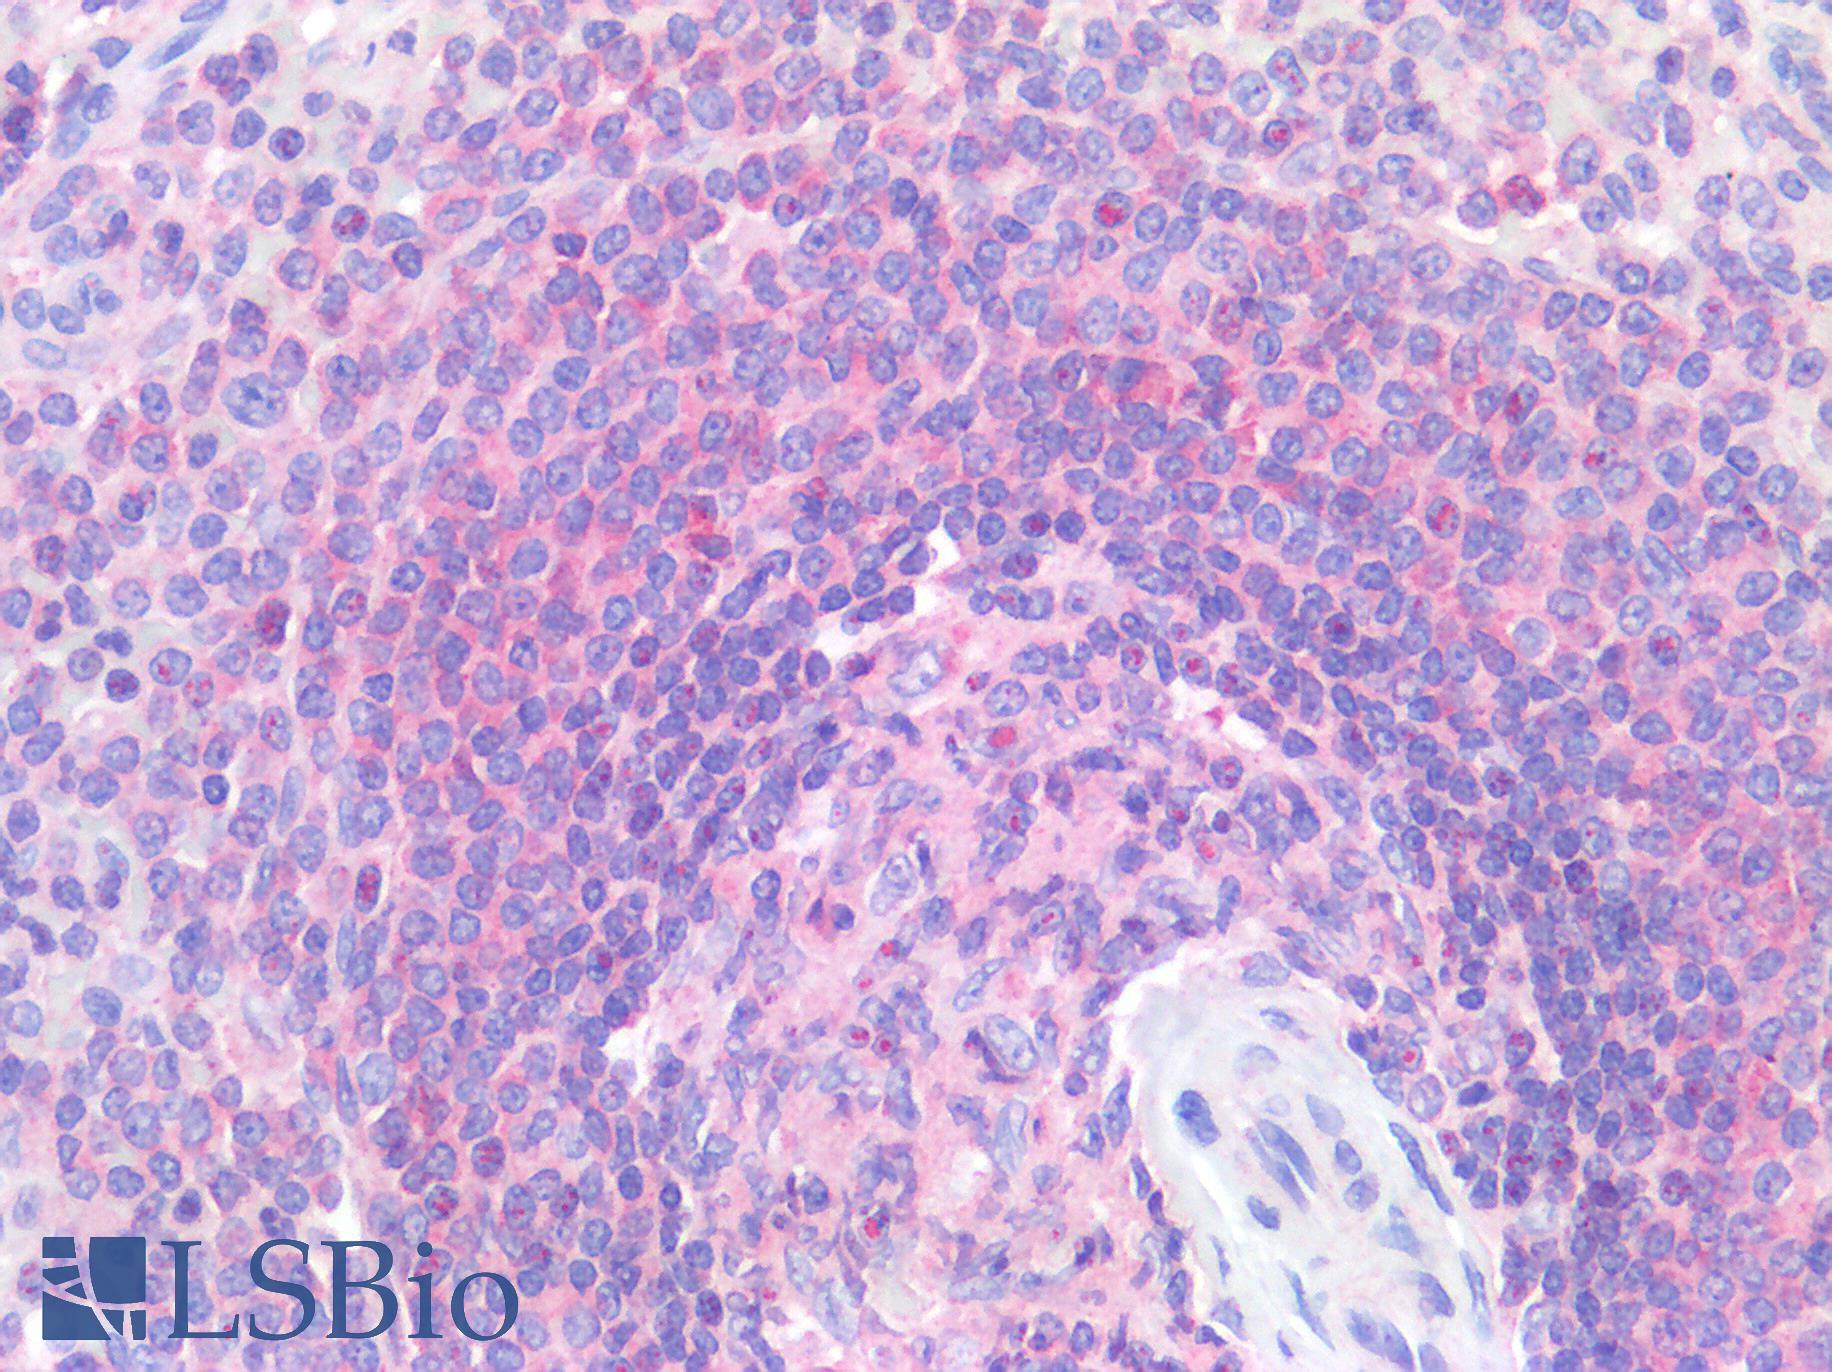 CD33 Antibody - Human Spleen: Formalin-Fixed, Paraffin-Embedded (FFPE)